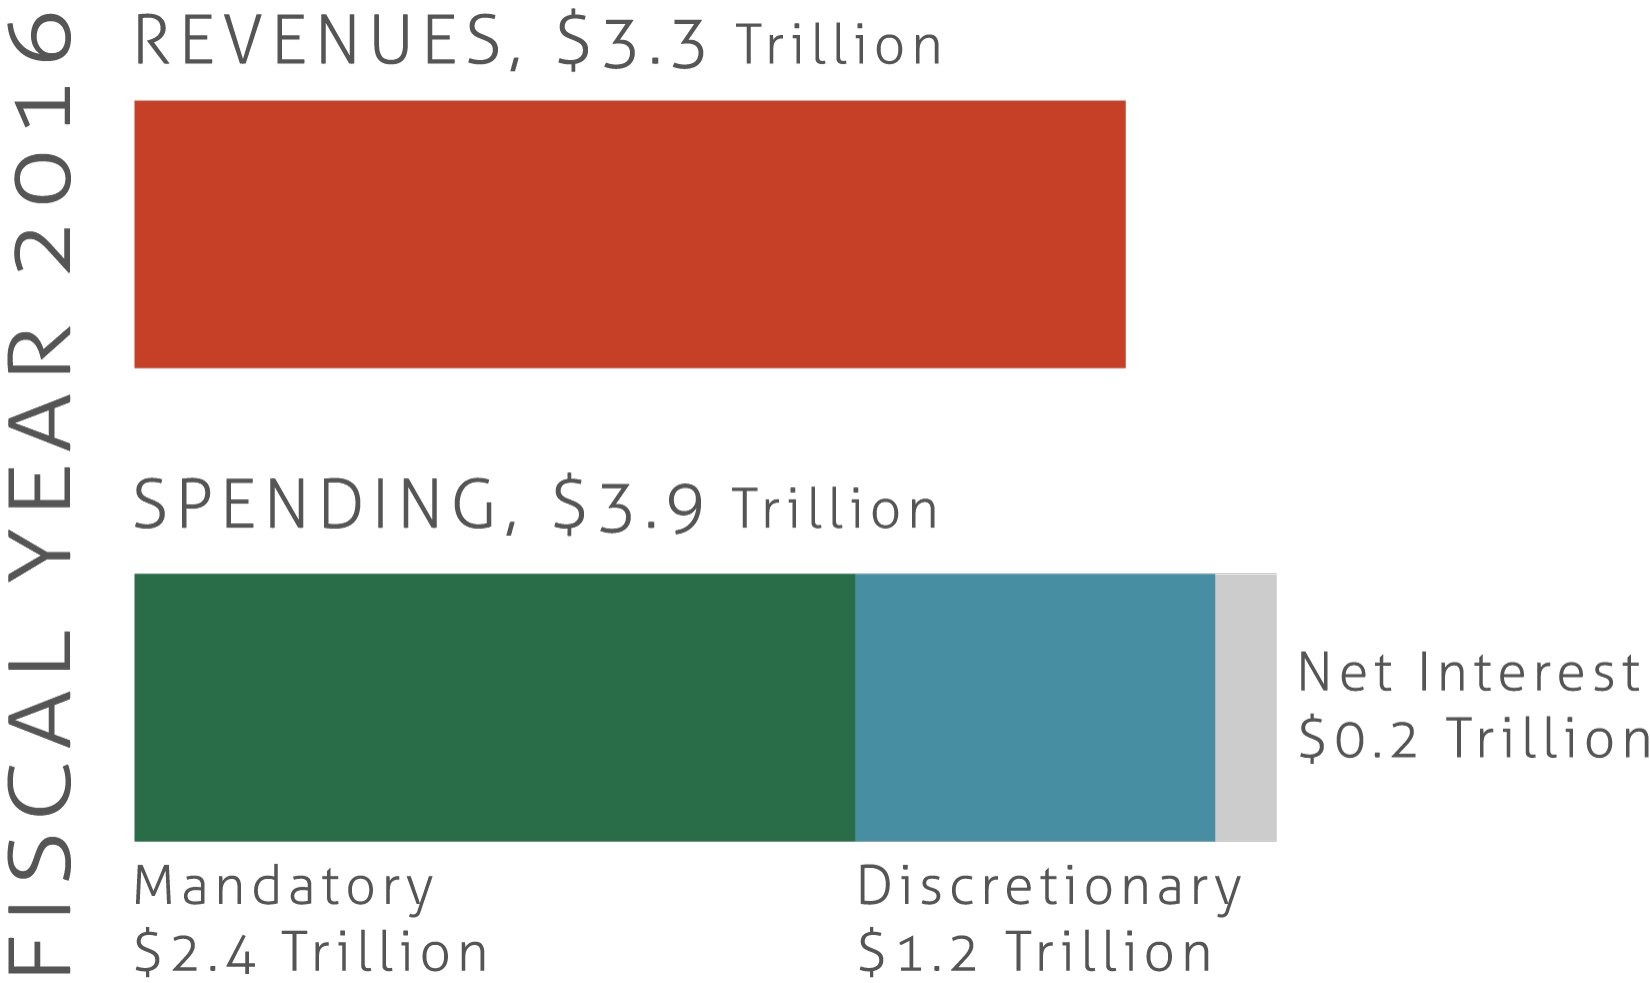 Revenues, $3.3 Trillion; Spending, $3.9 Trillion